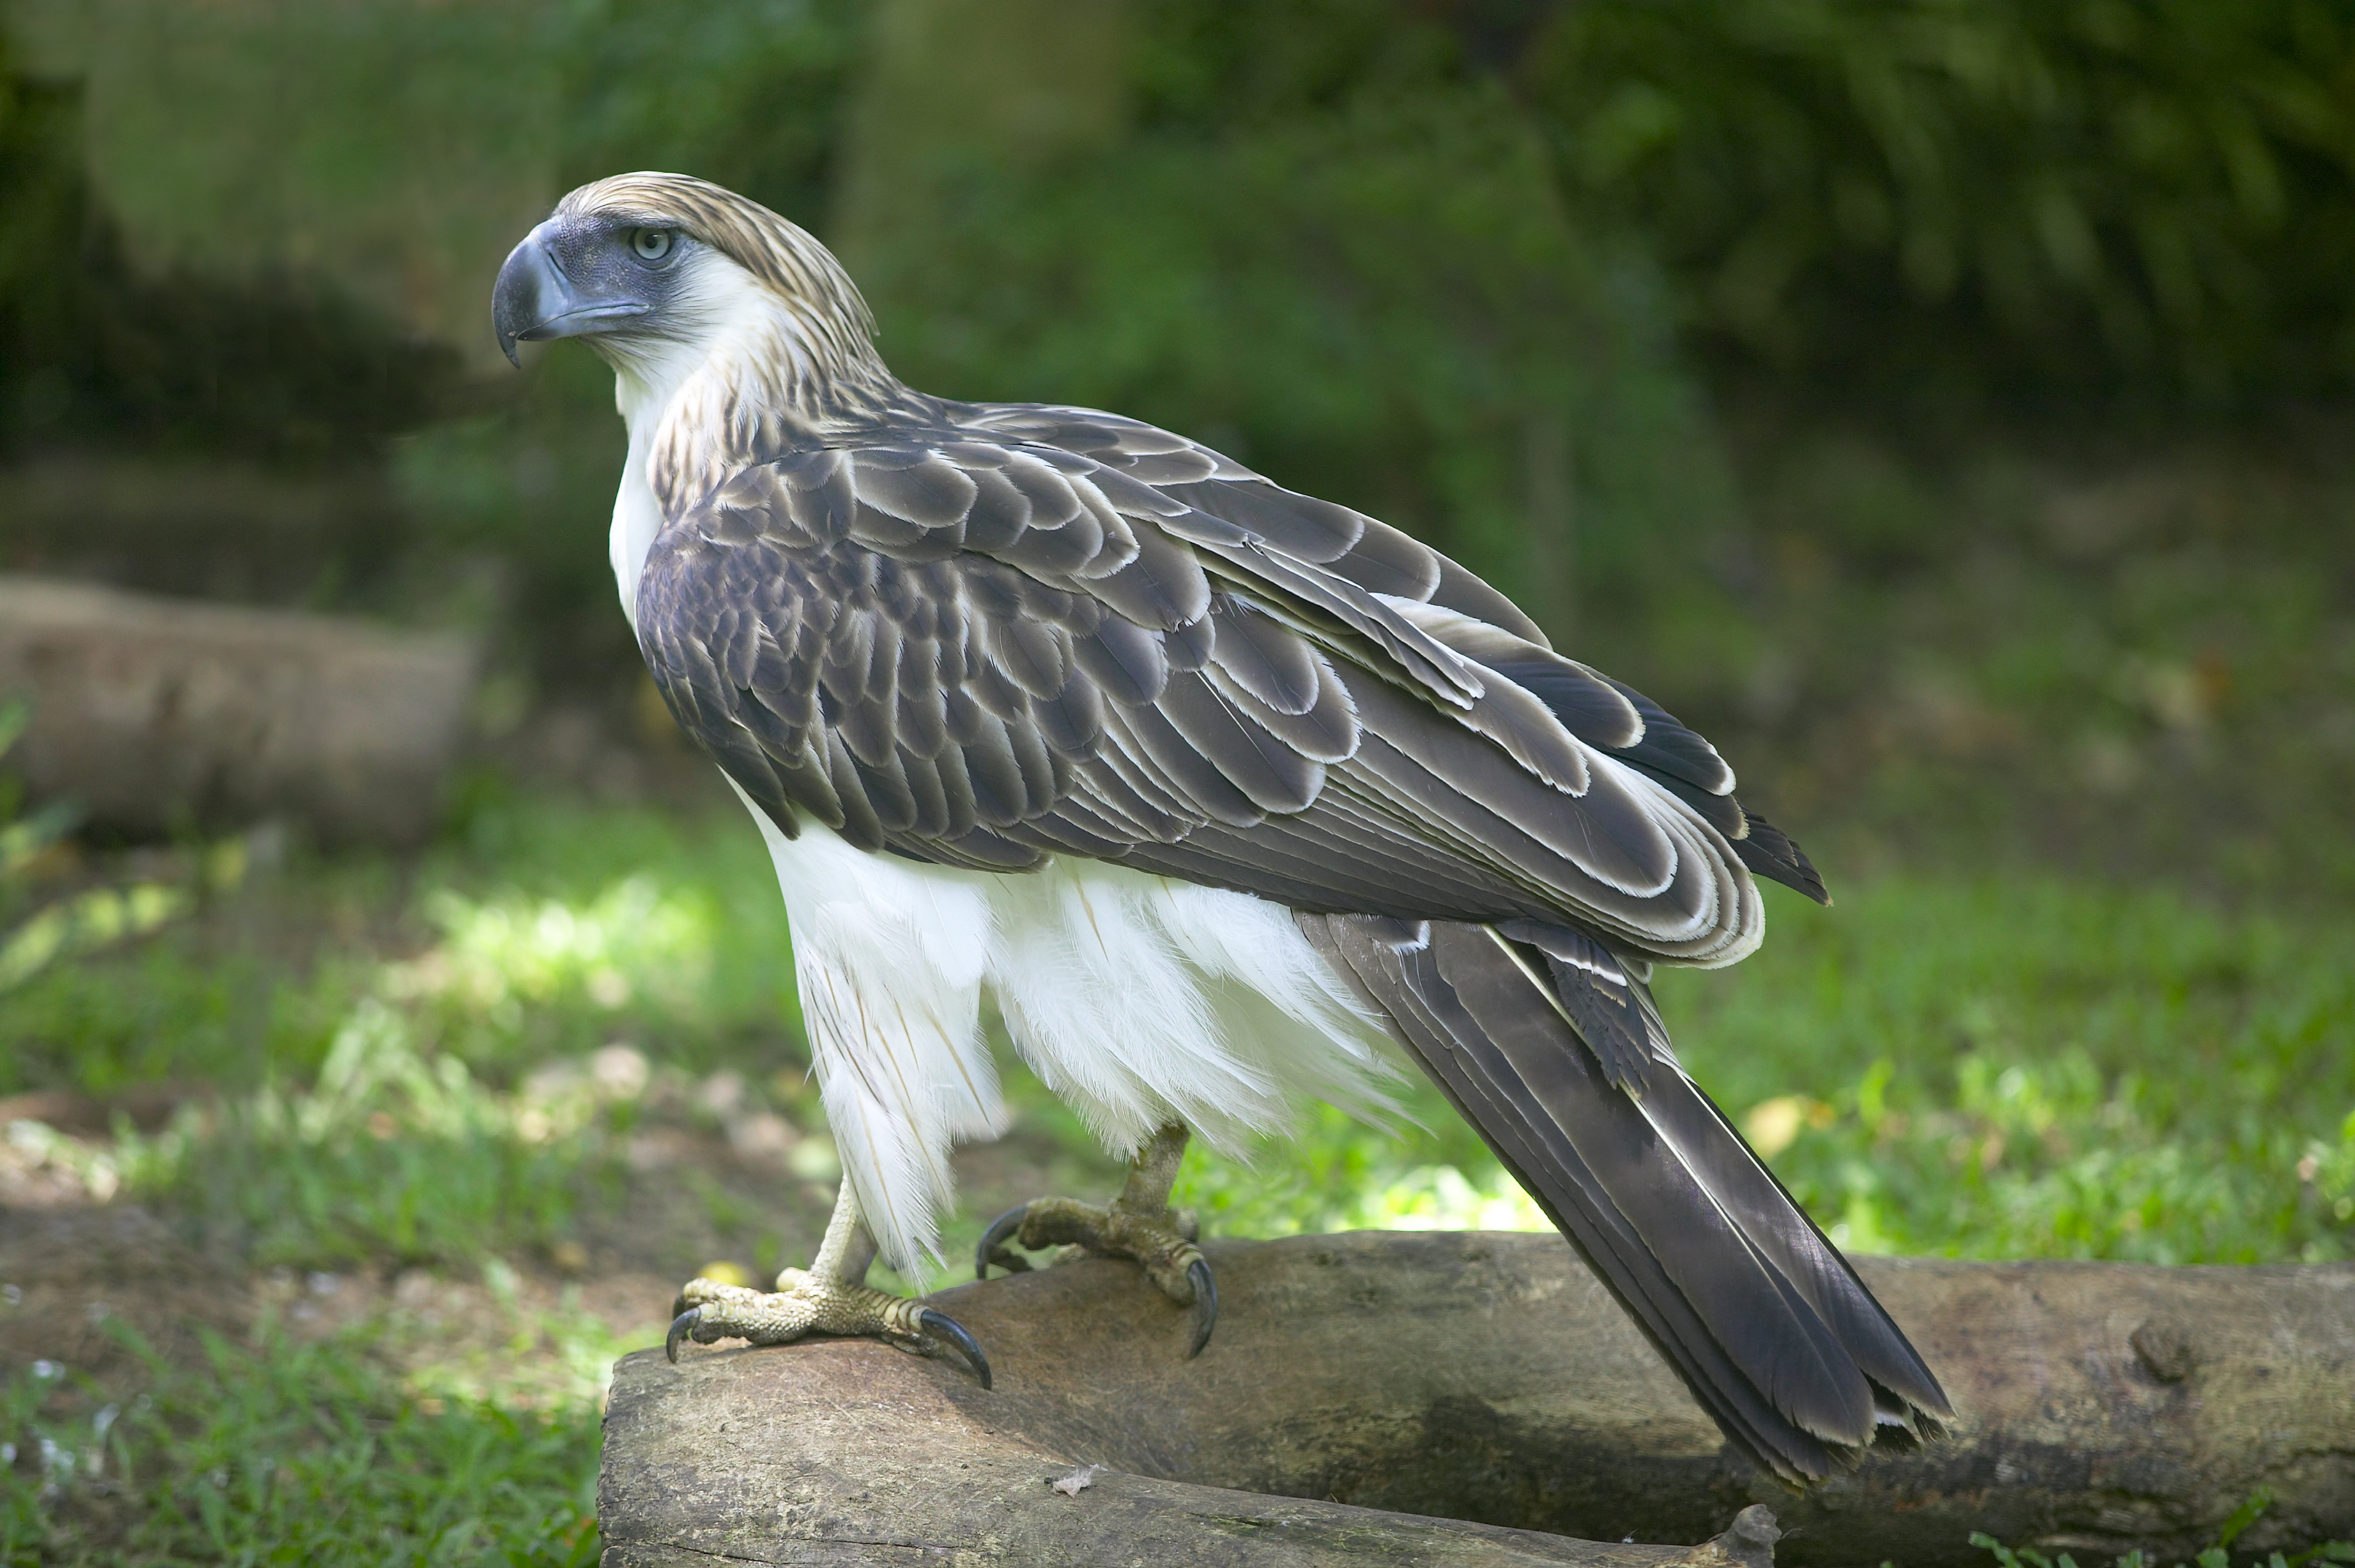 The philippine eagle